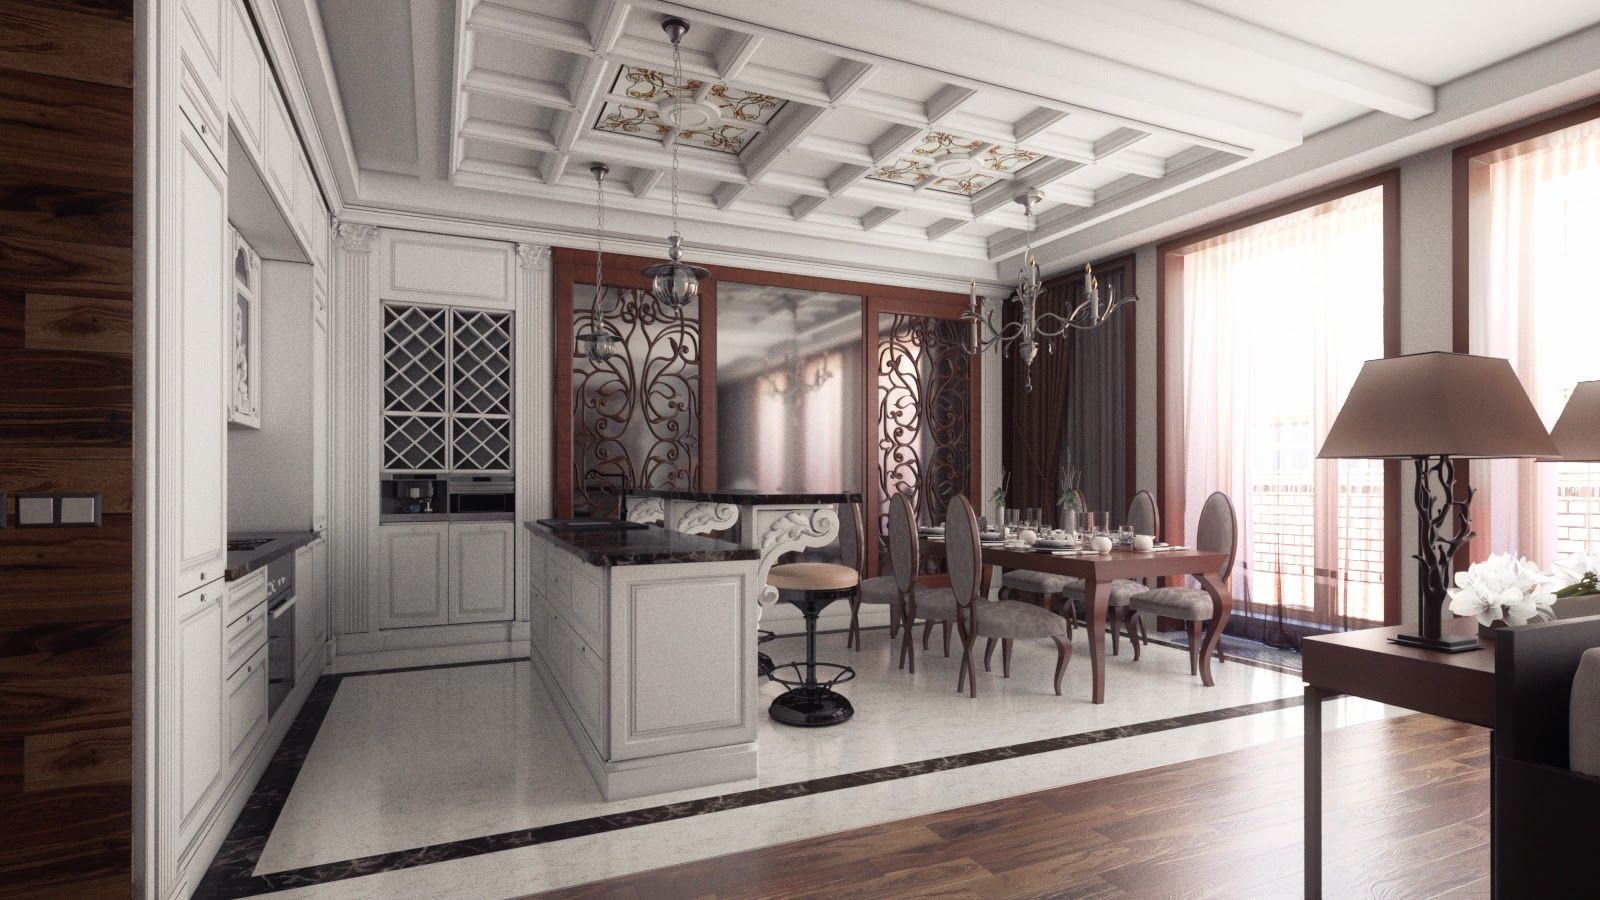 art nouveau interior design kitchen